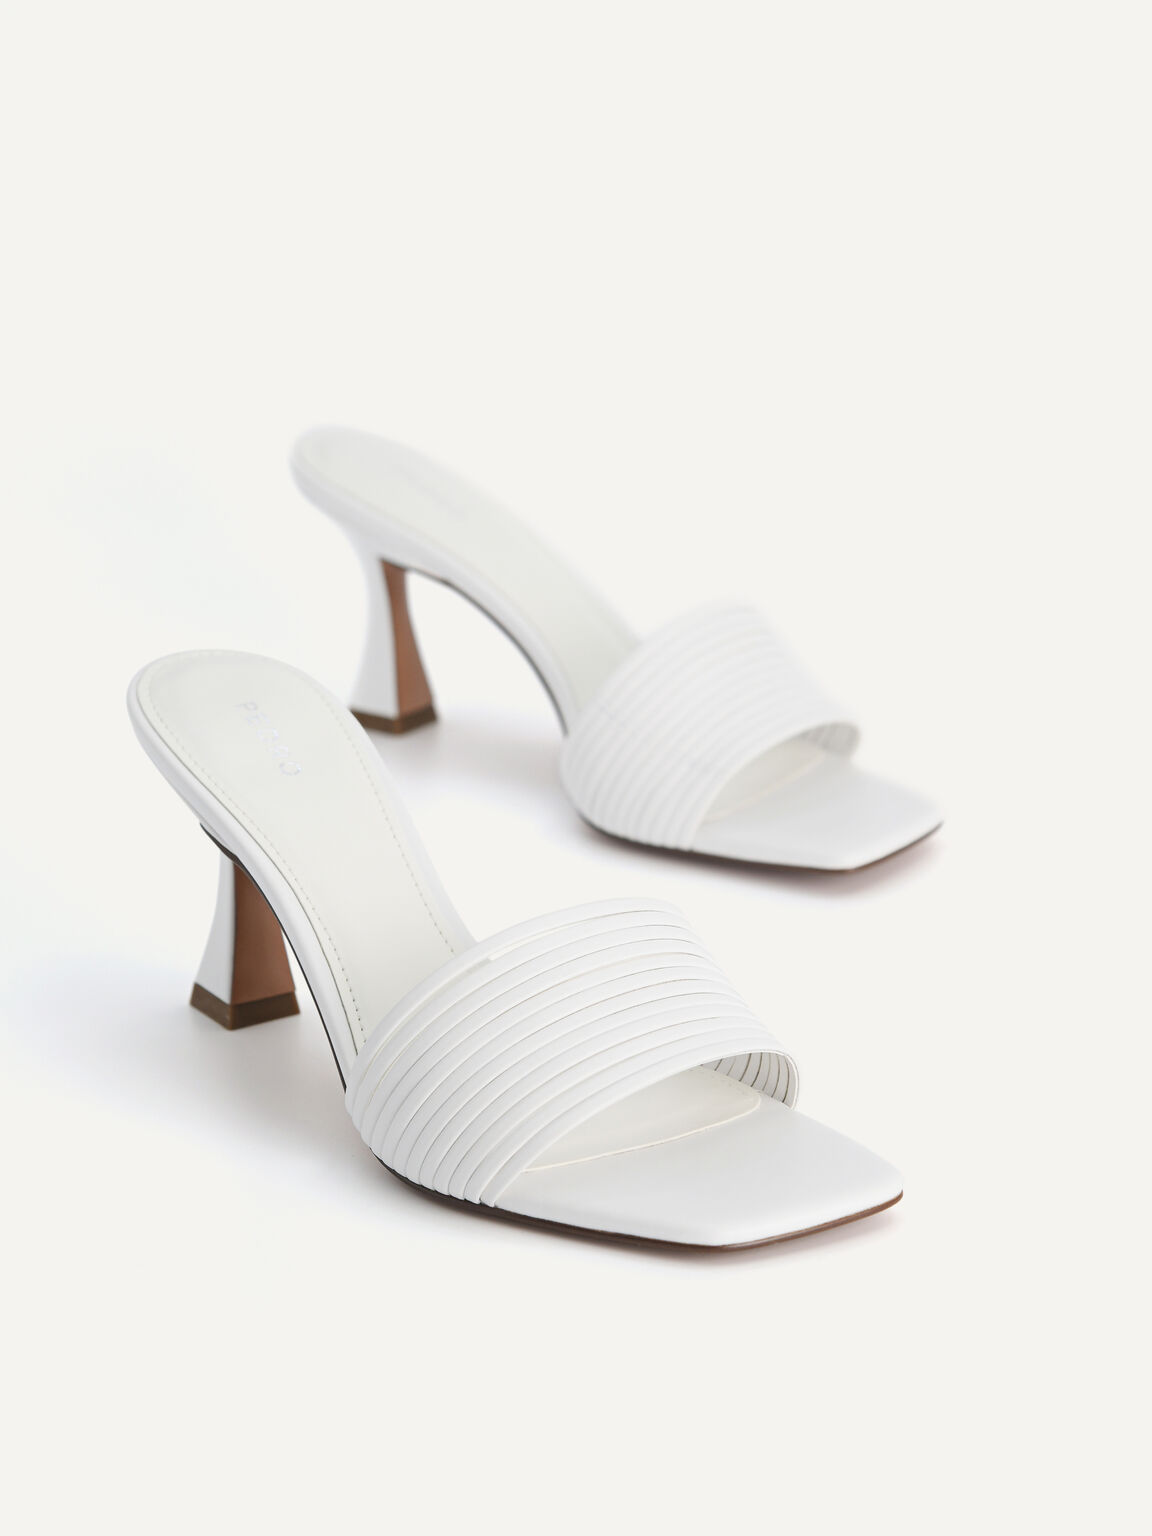 High Heeled Sandals, White